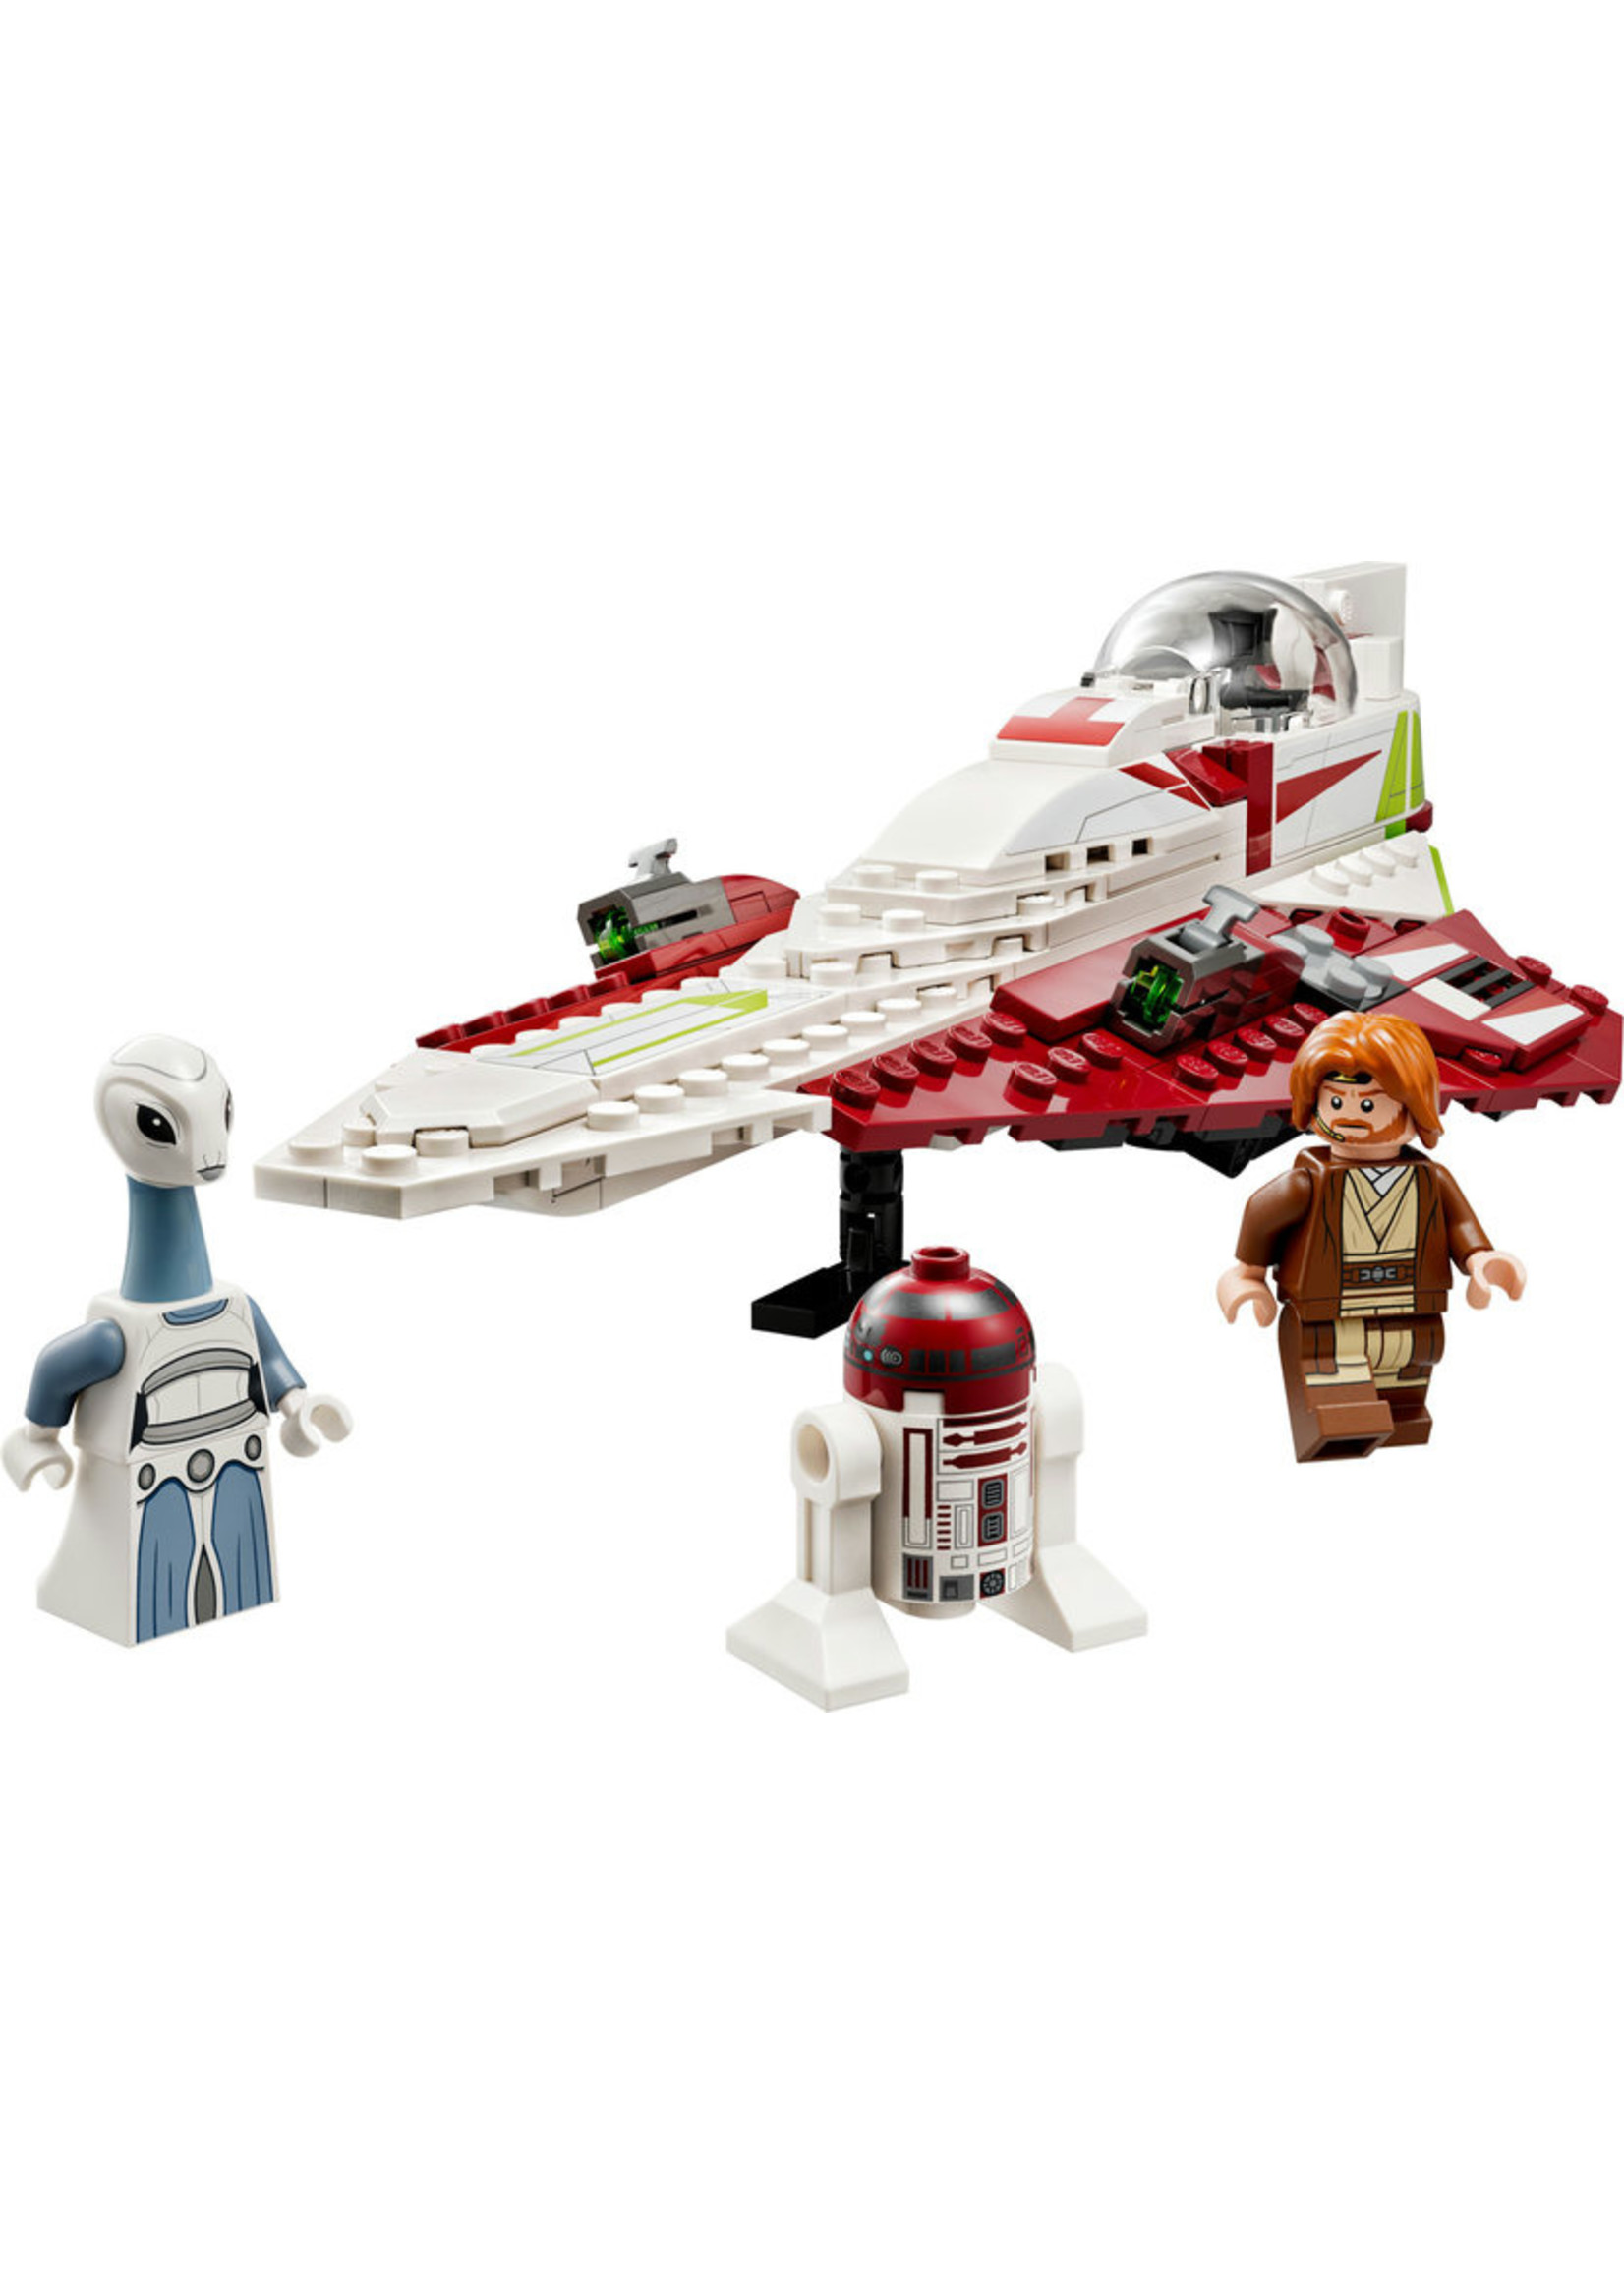 LEGO 75333 - Obi-Wan Kenobi's Jedi Starfighter